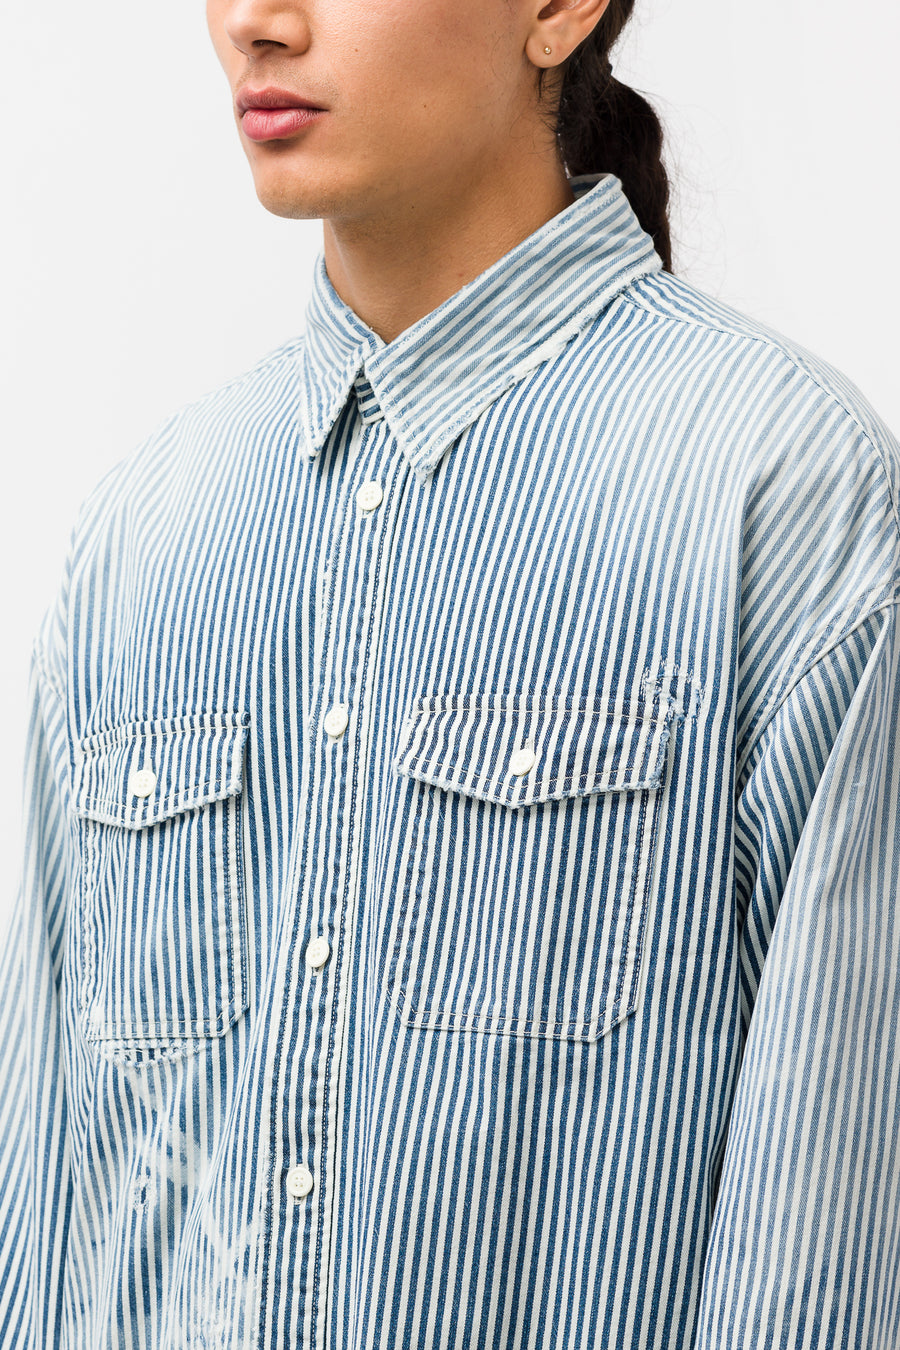 visvim lumber shirt L/S CRASH サイズ3 bckediri.beacukai.go.id